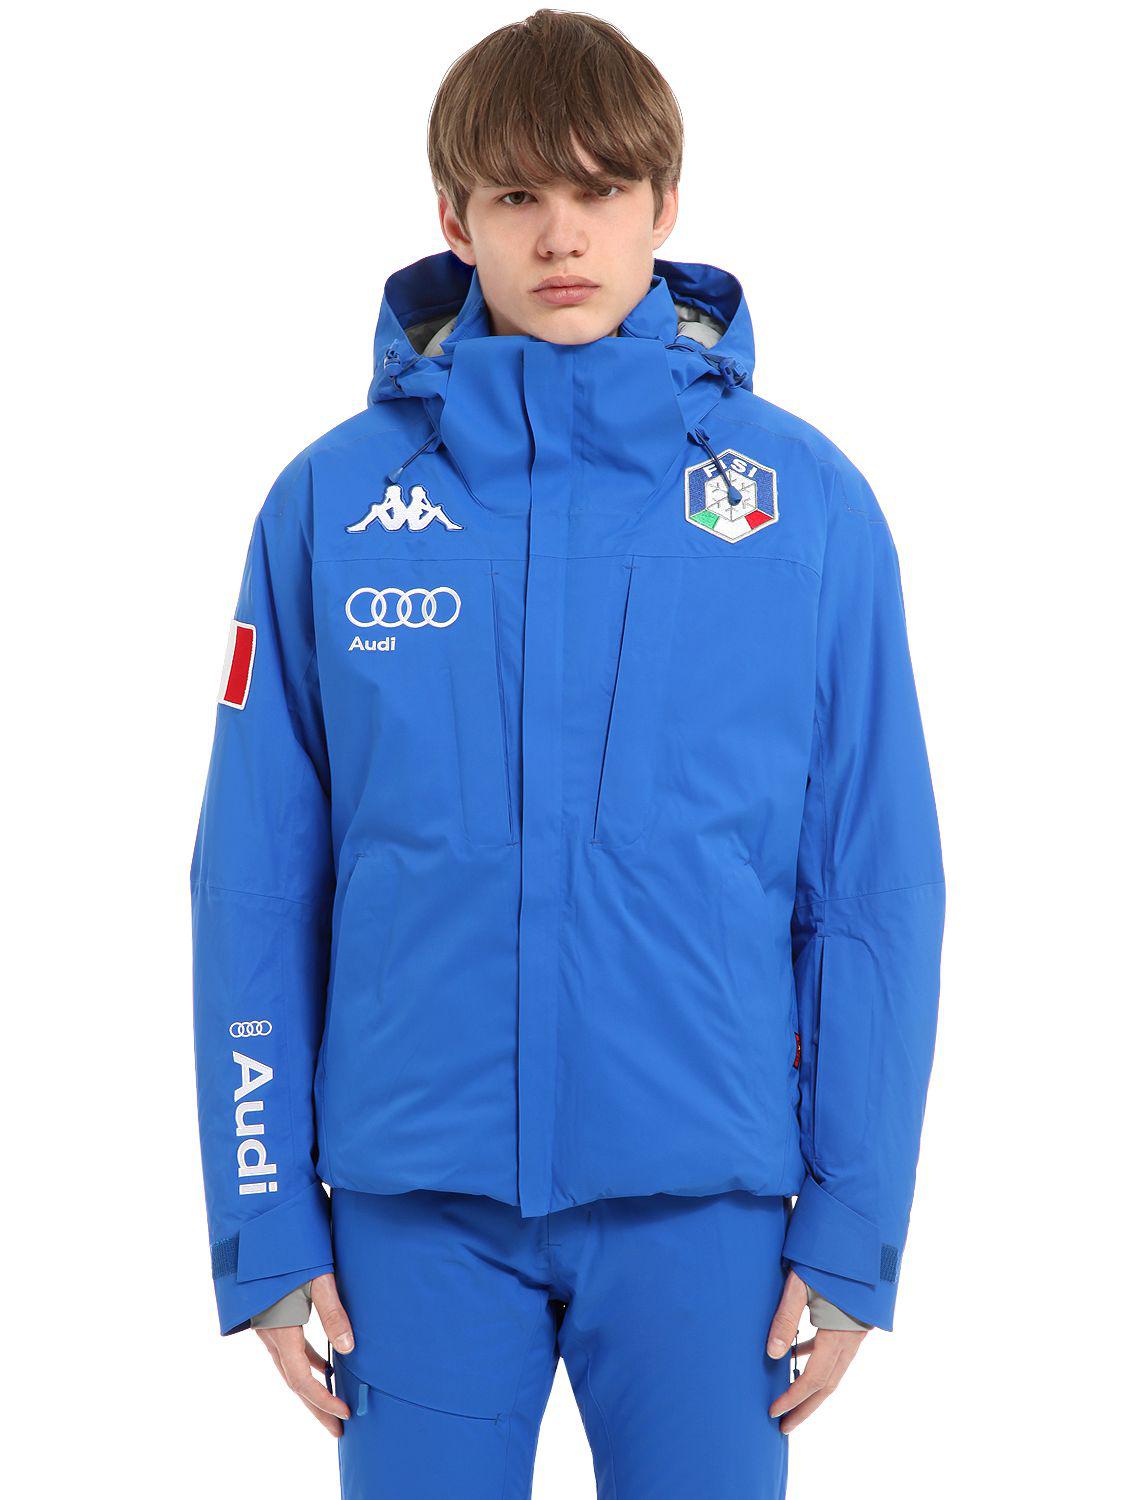 Kappa Fisi Italian Ski Team Jacket in Blue for Men - Lyst